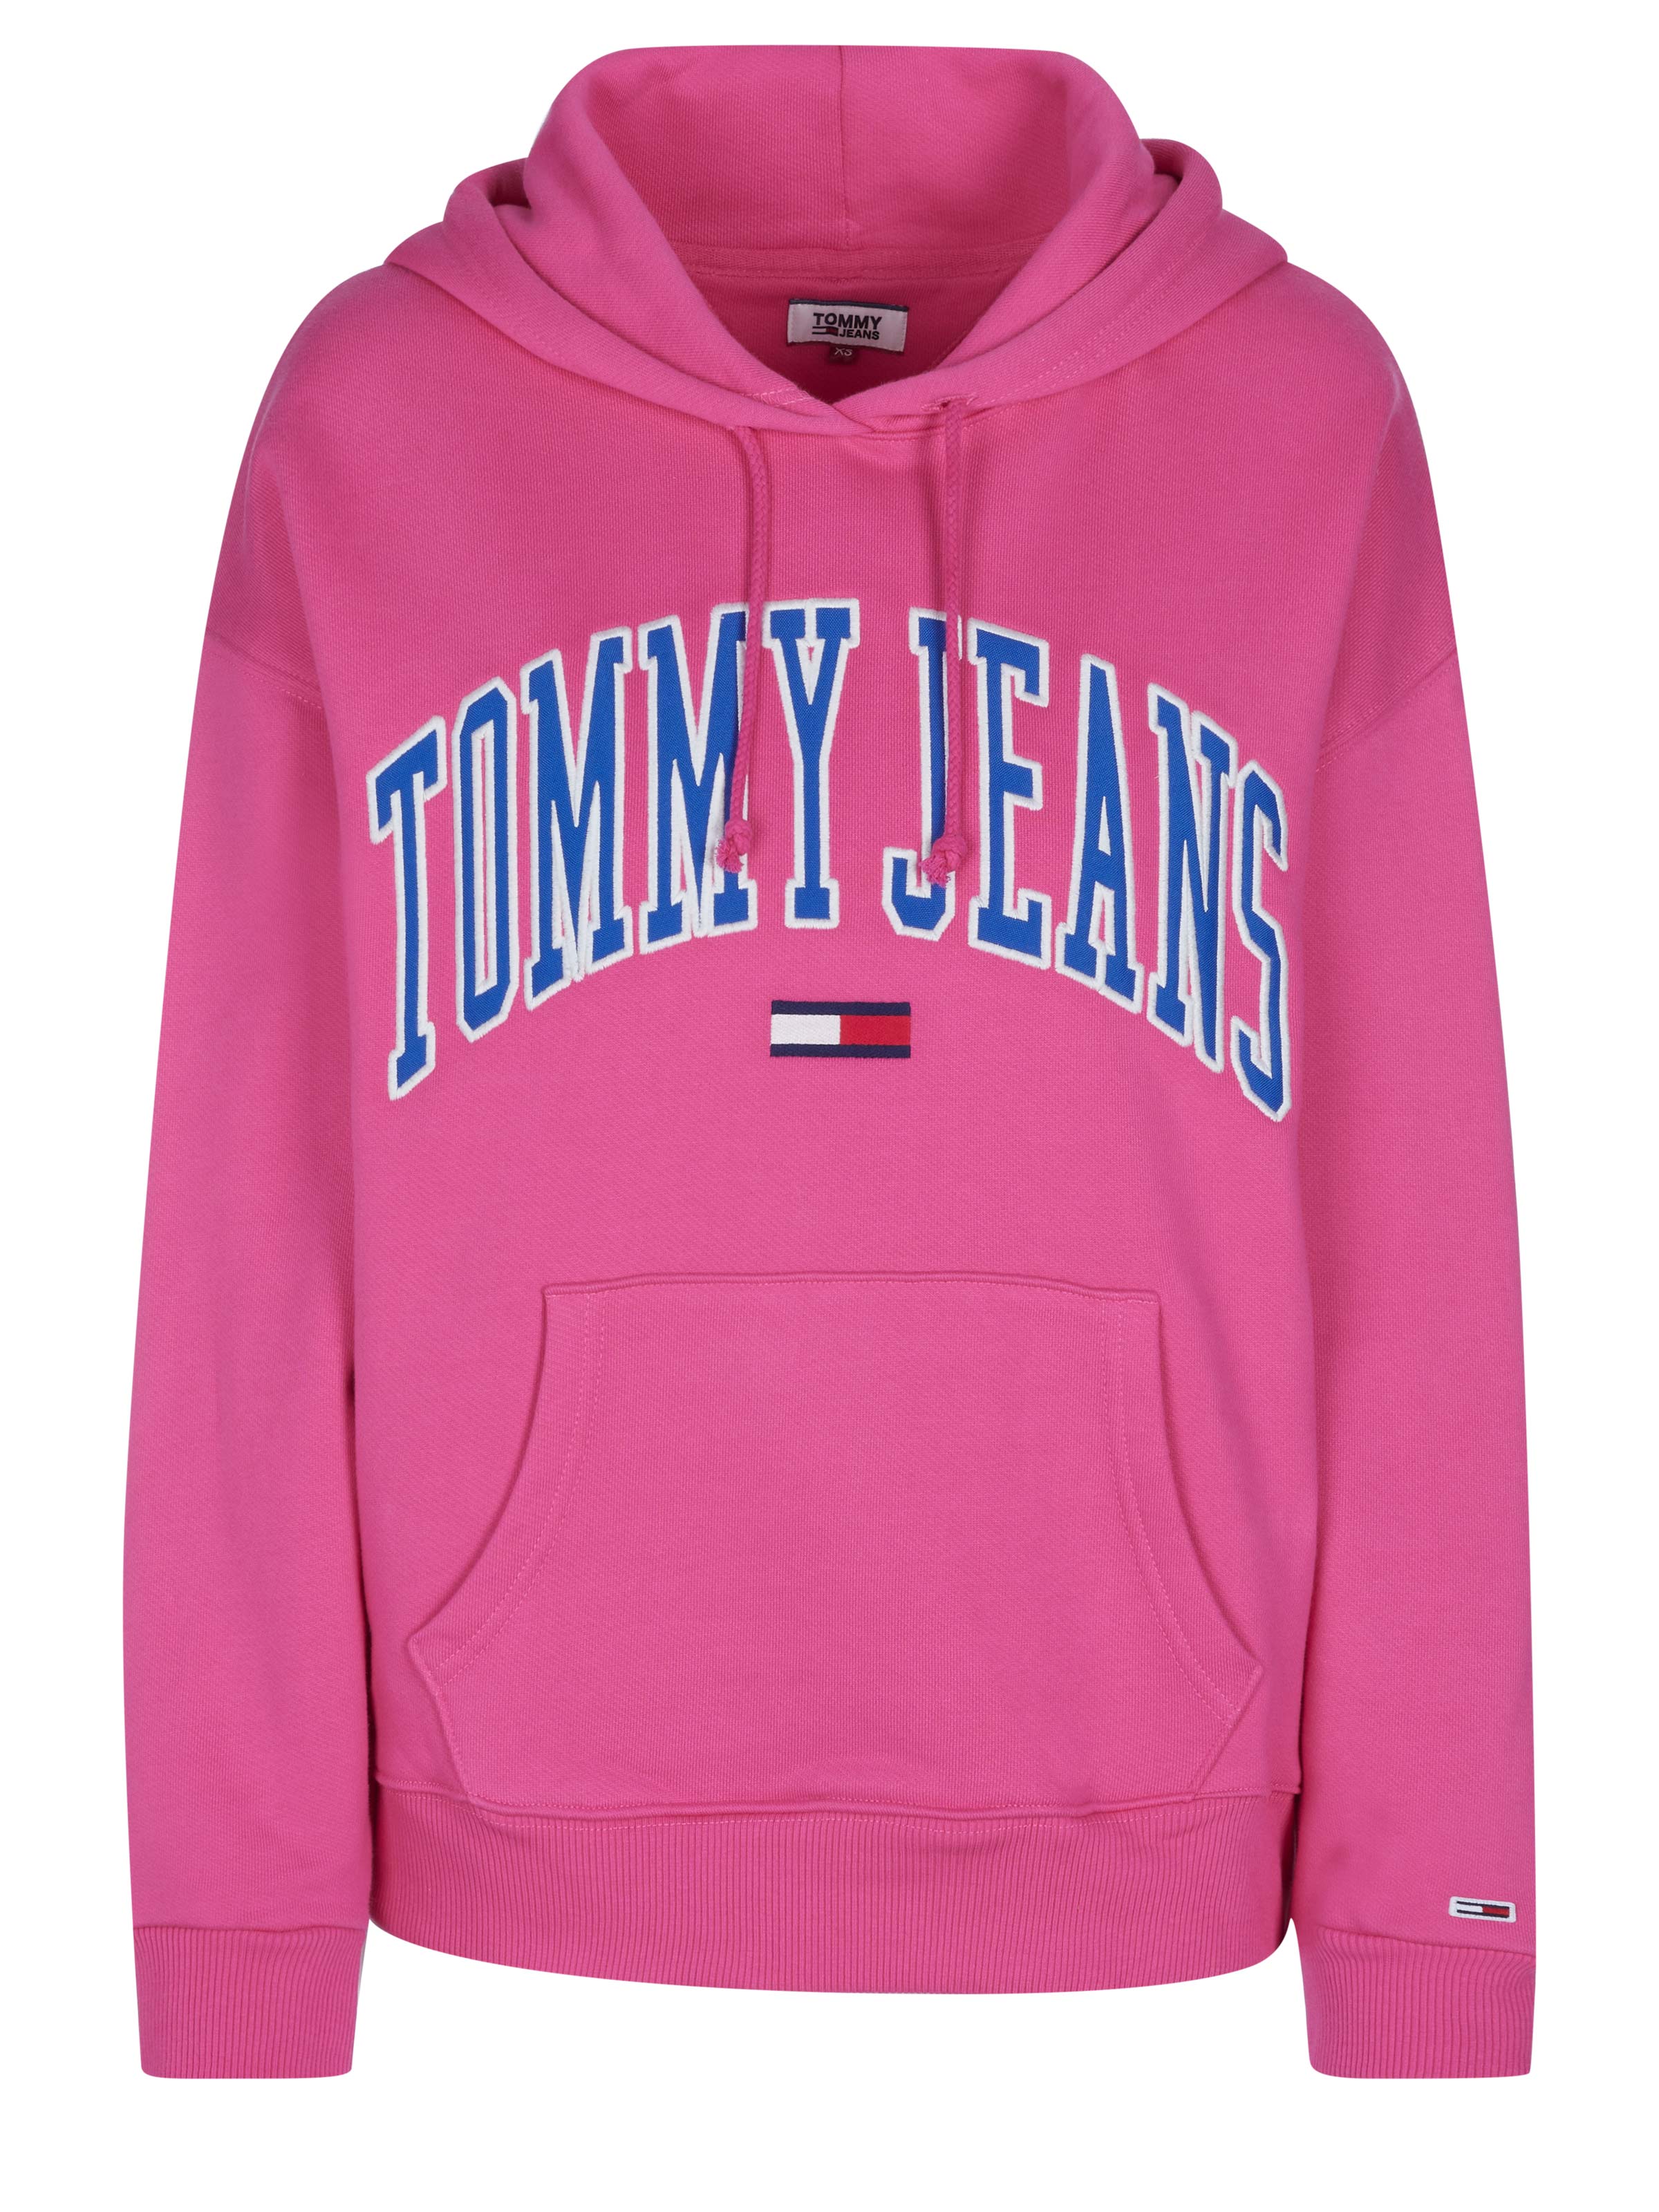 | Pullover Jeans on SALE Fashionesta Pink Tommy Hilfiger